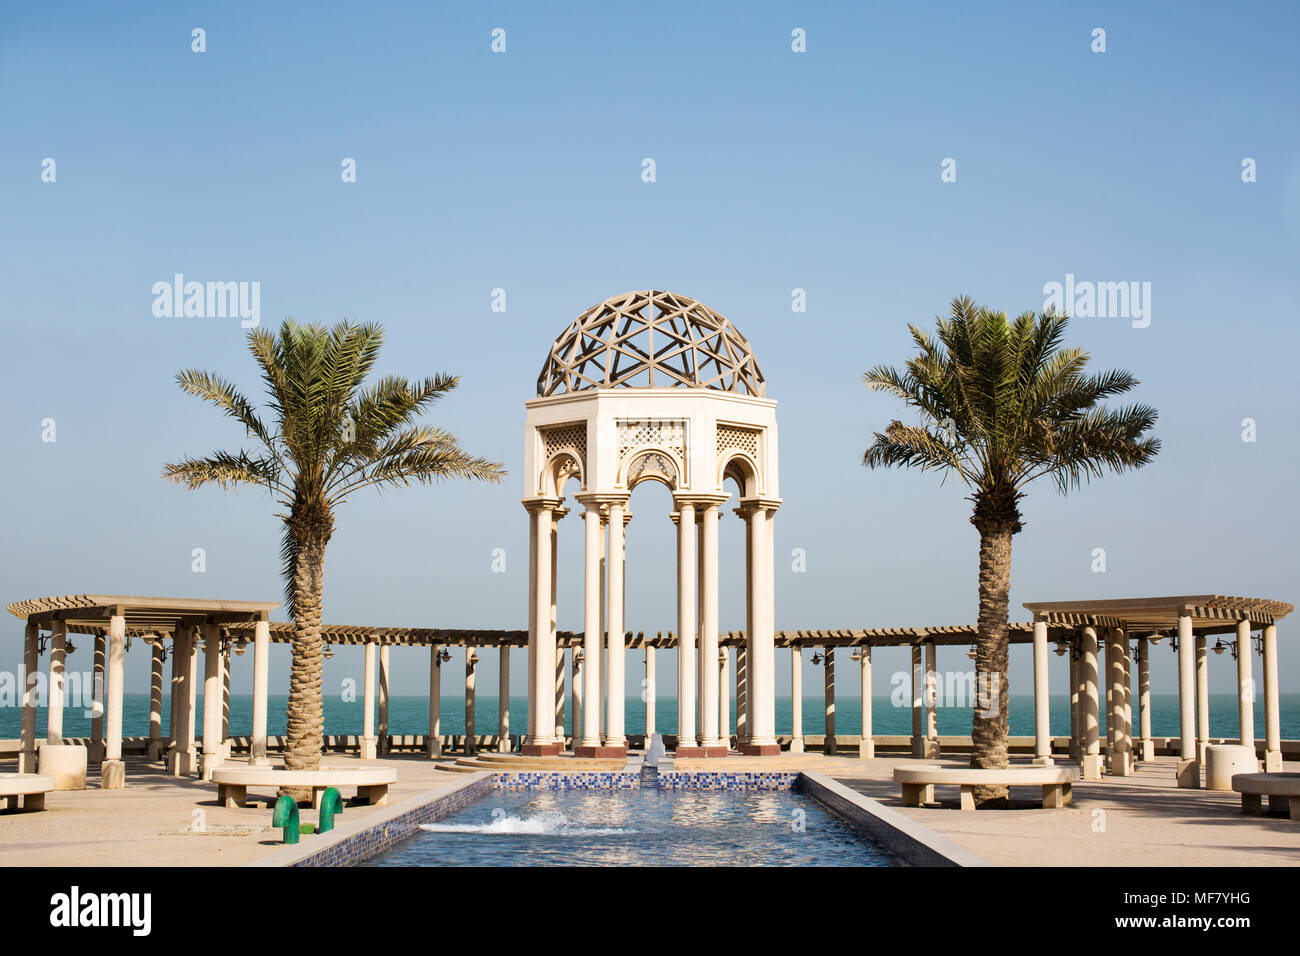 Arquitectura de cúpula islámica a lo largo de la corniche, en Kuwait Foto de stock